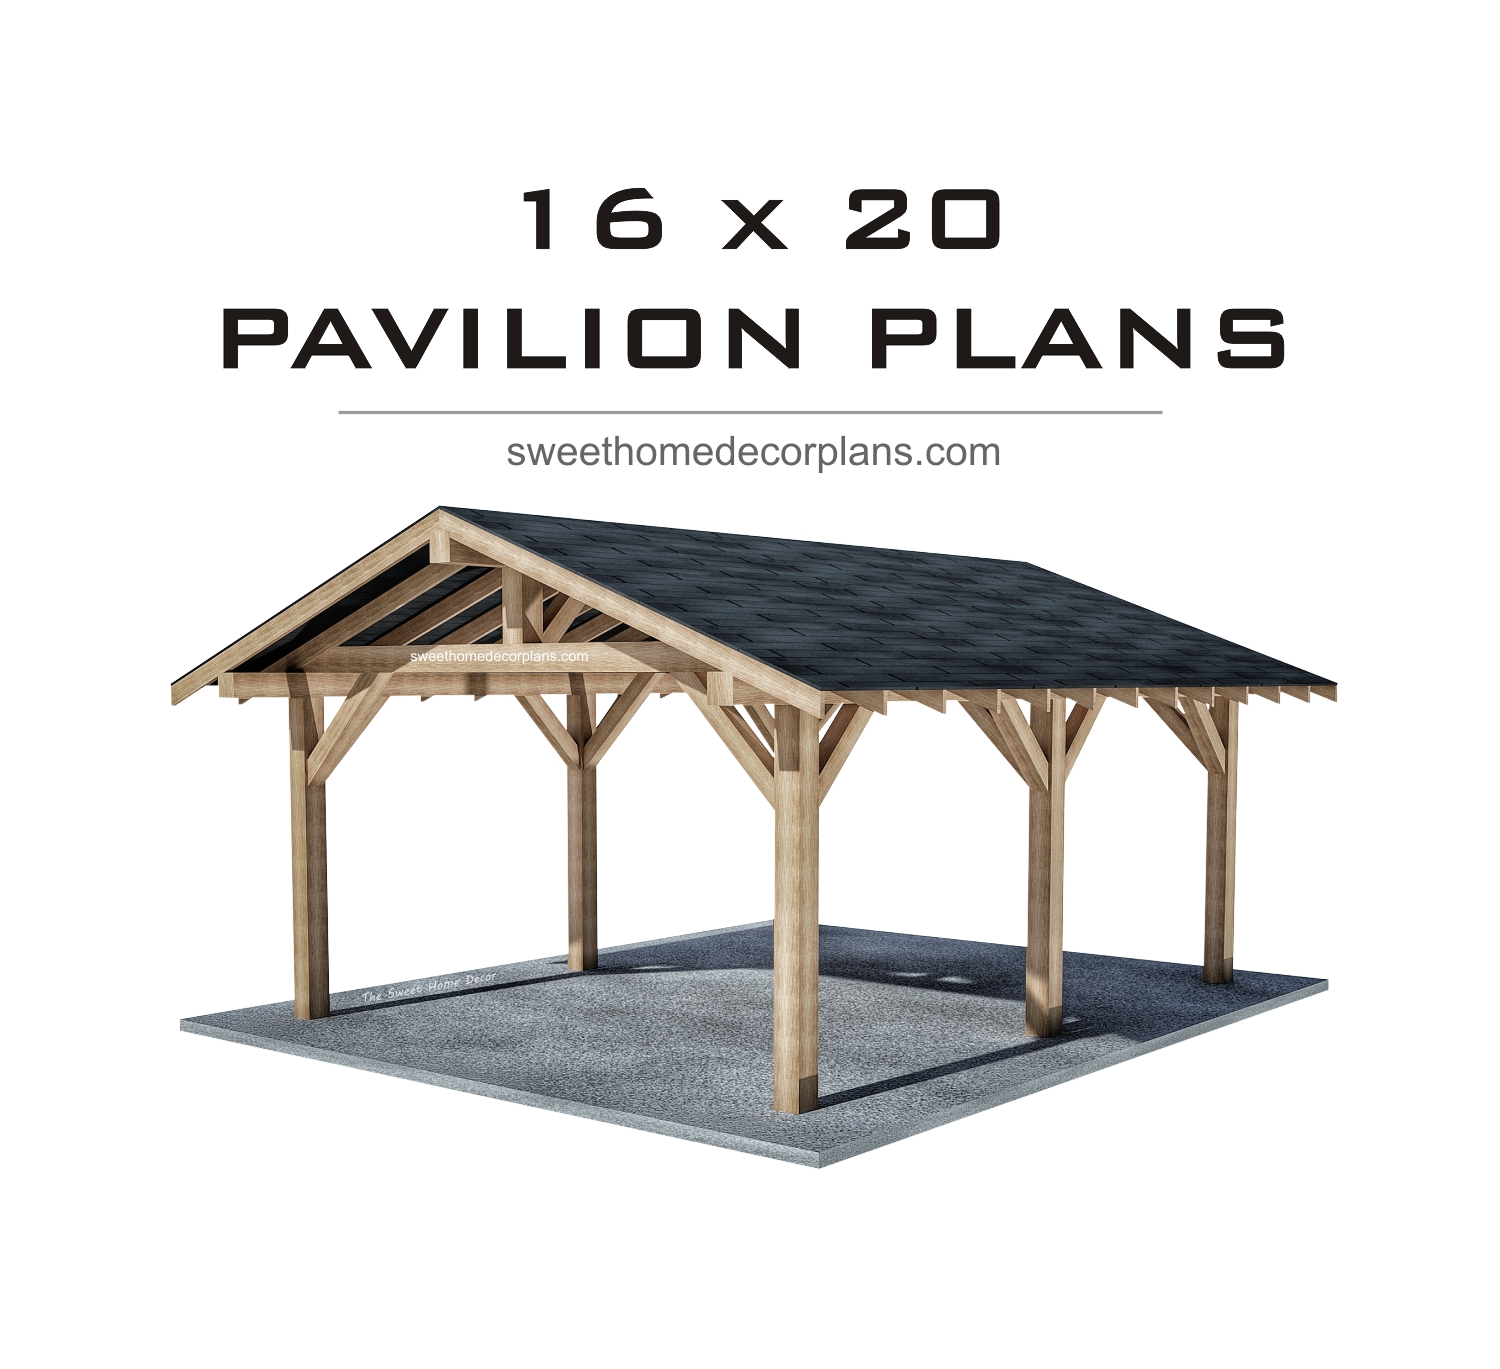 Diy-wooden-16-х-20-gable-pavilion-plans-carport-patio-gazebo